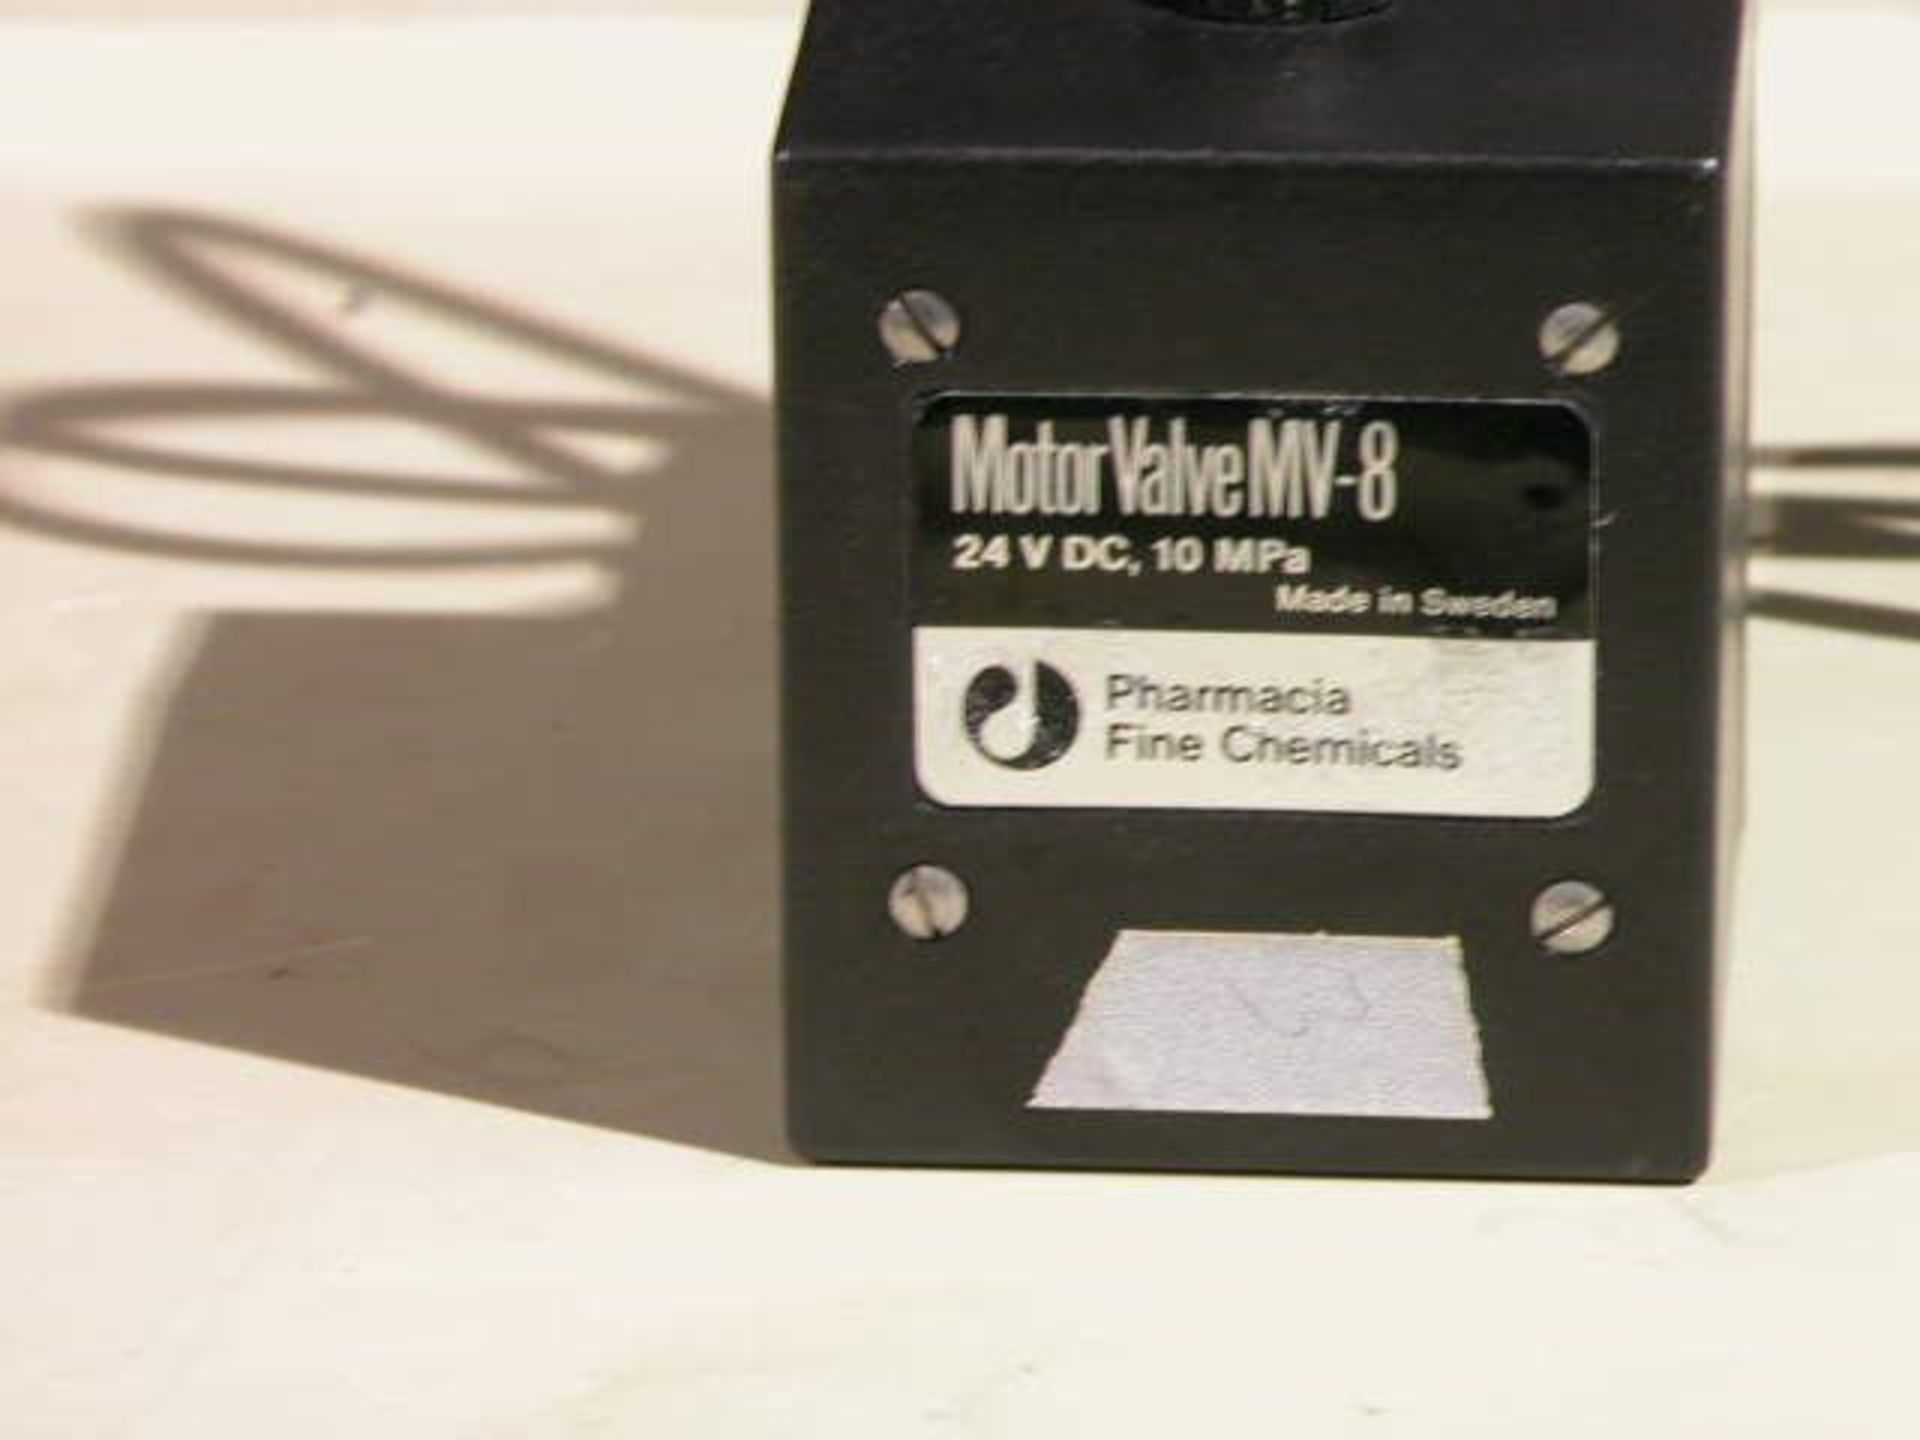 Pharmacia LKB Motor Valve MV-8 24V DC 10 Mpa, Qty 1, 322237963062 - Image 3 of 6